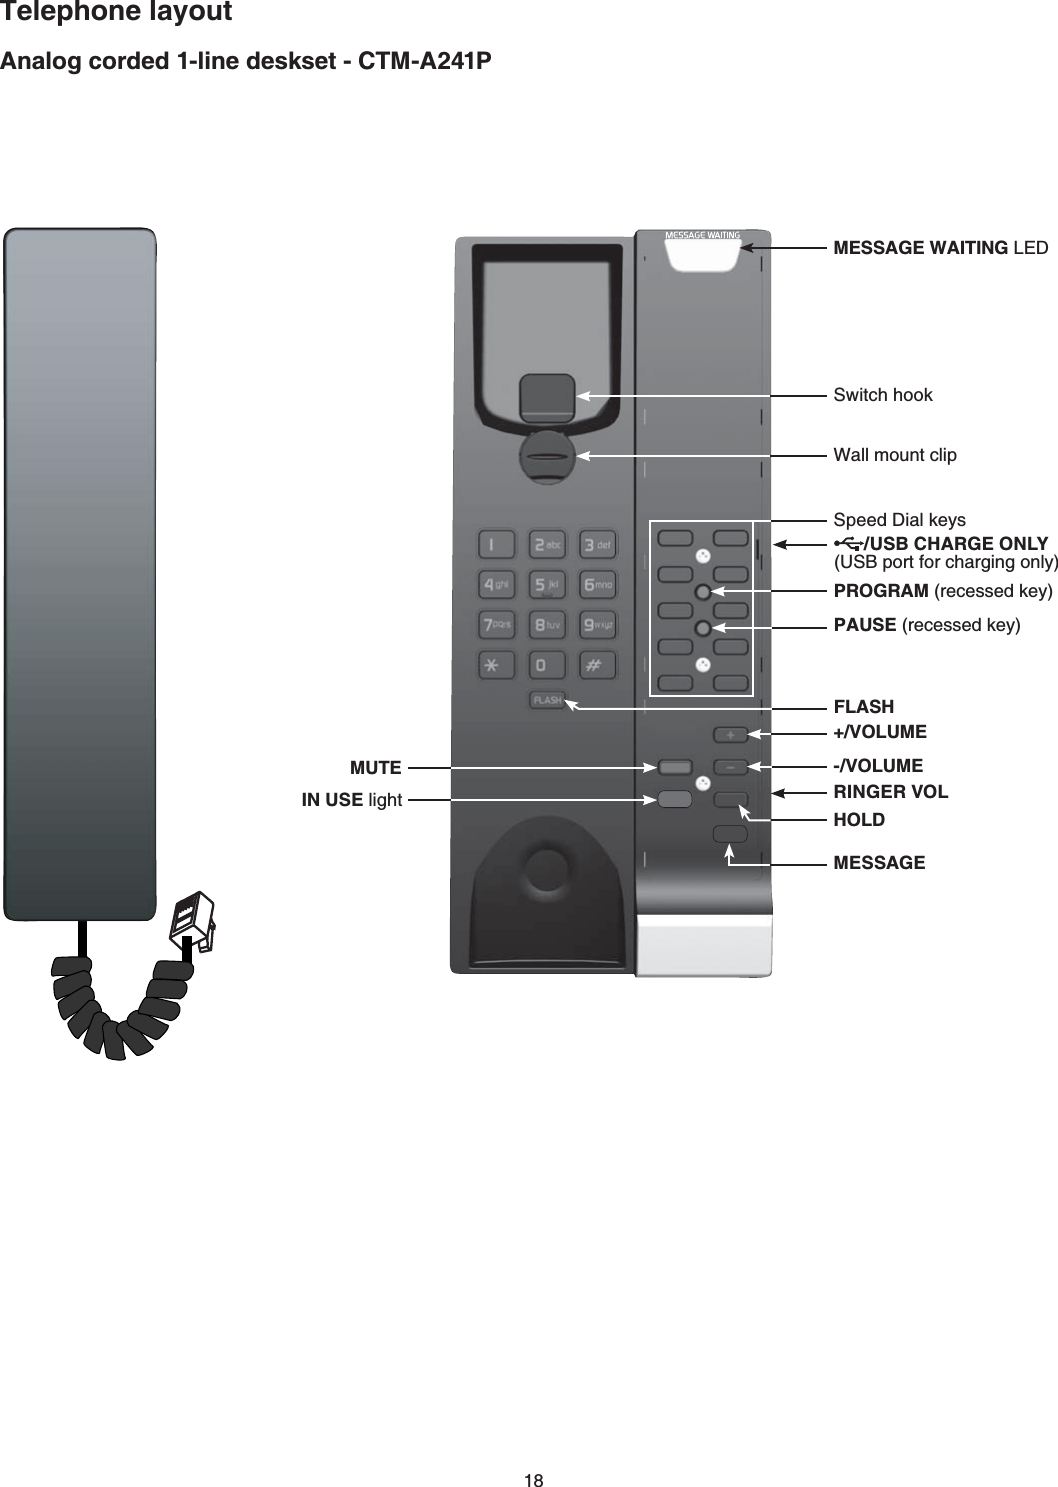 18Telephone layoutAnalog corded 1-line deskset - CTM-A241PMESSAGE WAITING LED-/VOLUME+/VOLUMEPROGRAMTGEGUUGFMG[PAUSETGEGUUGFMG[FLASHHOLDMUTEIN USE lightWall mount clipSwitch hookSpeed Dial keysRINGER VOLMESSAGE/USB CHARGE ONLY(USB port for cJCTIKPIQPN[